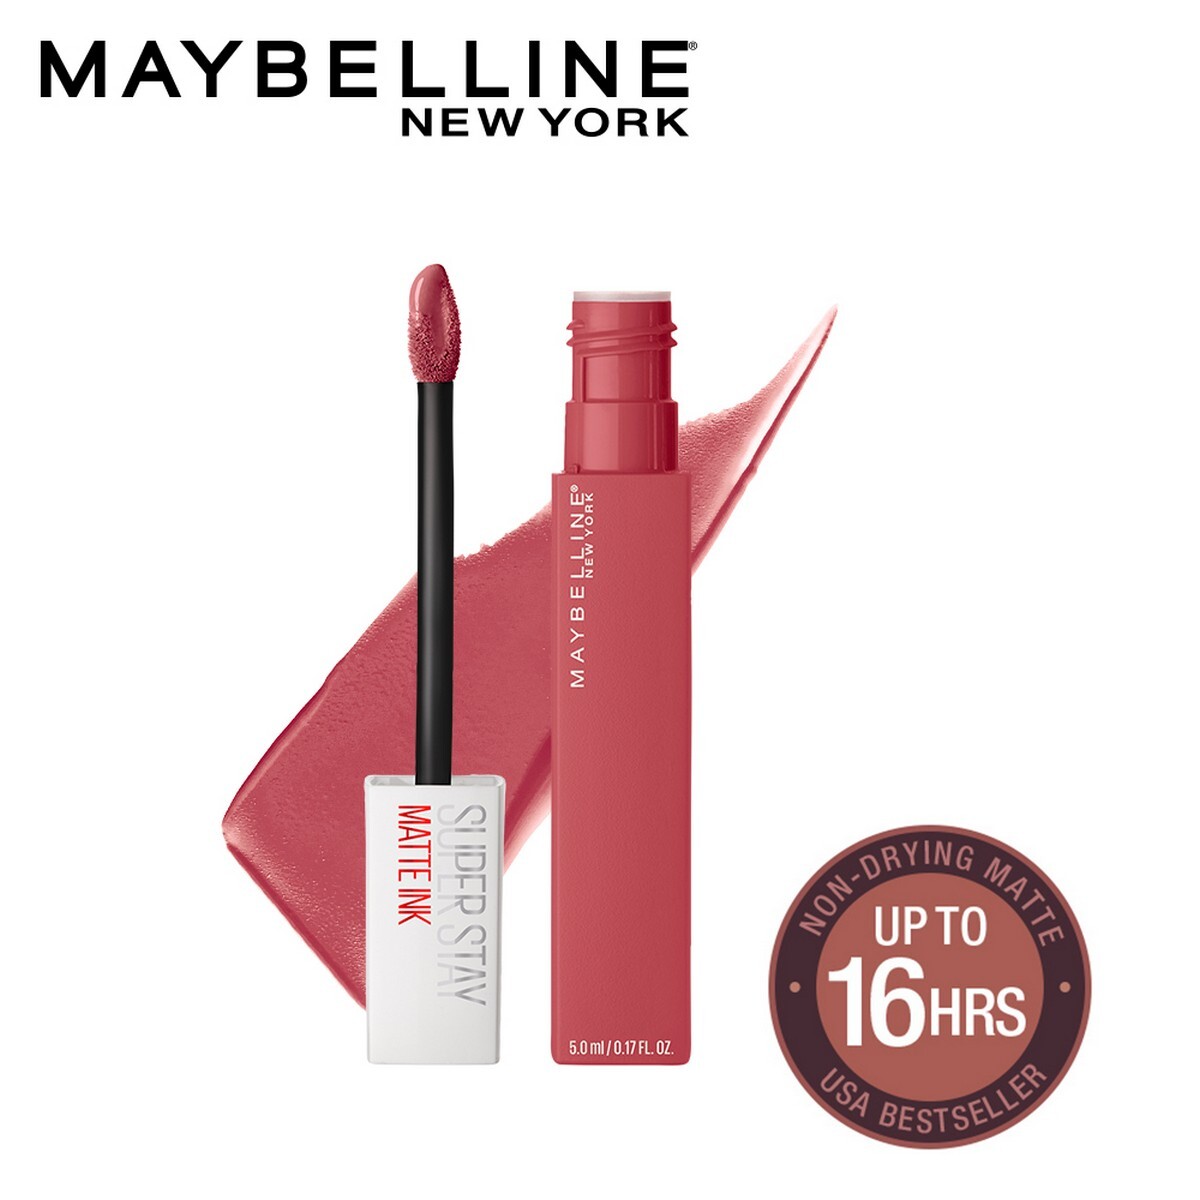 Maybelline New York Super Stay Matte Ink Liquid Lipstick, 225 Delicate, 5g